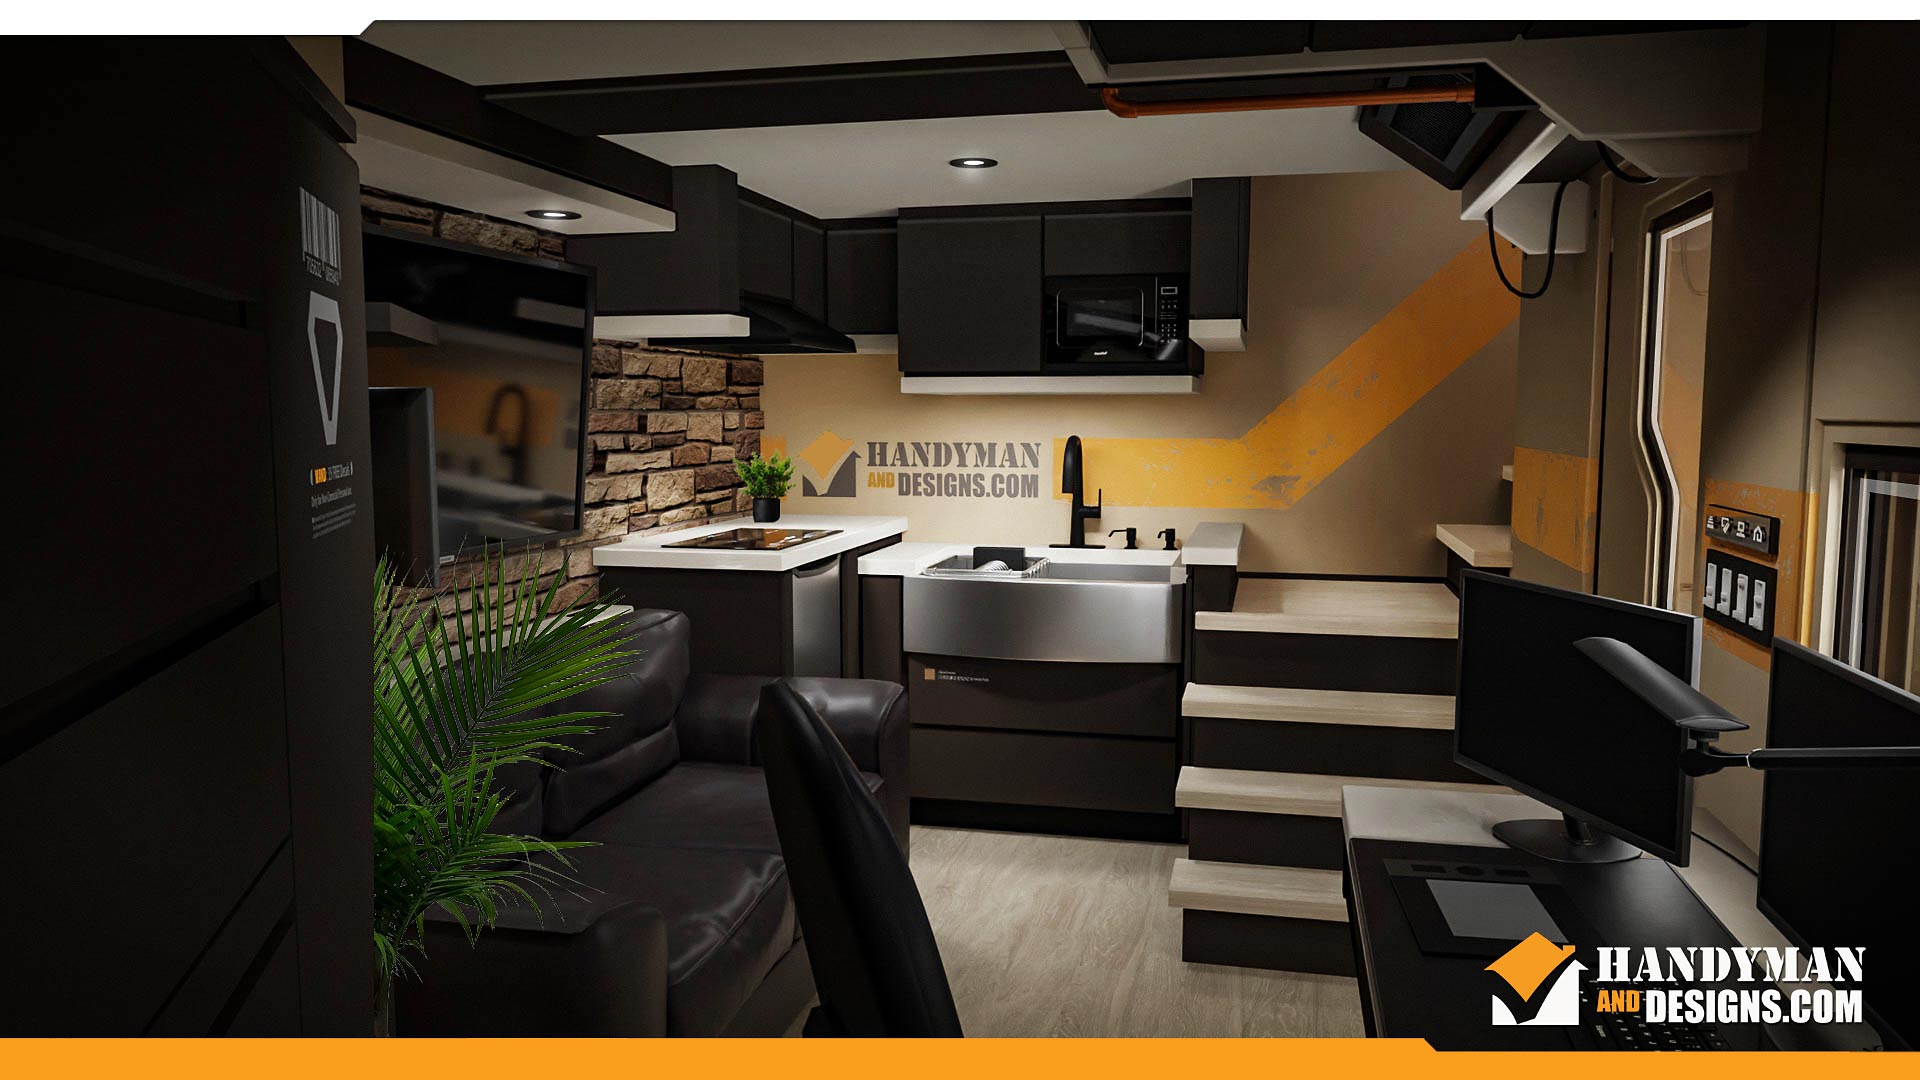 Sci-fi Handyman Studio Lounge Kitchen Area 3D Render Concept Photo